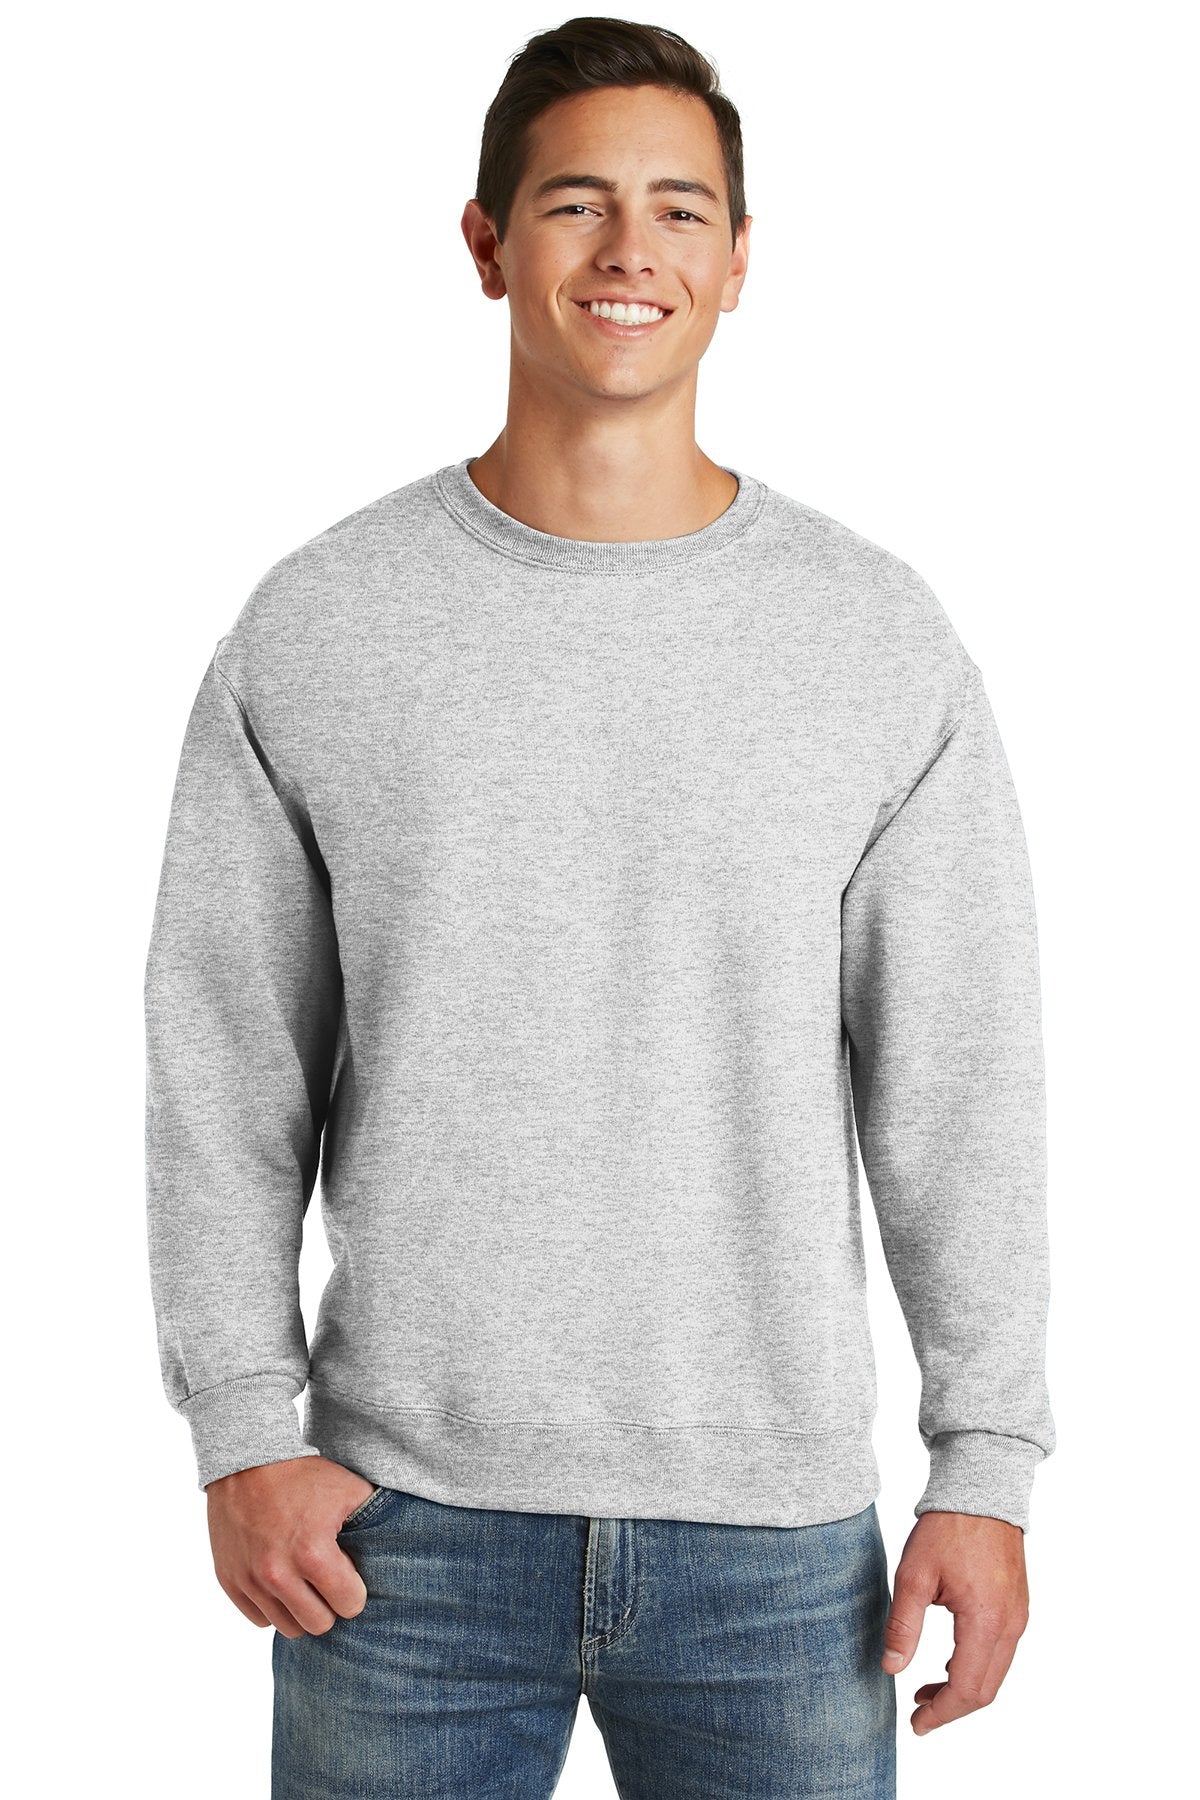 Jerzees Ash 4662M custom embroidered sweatshirts